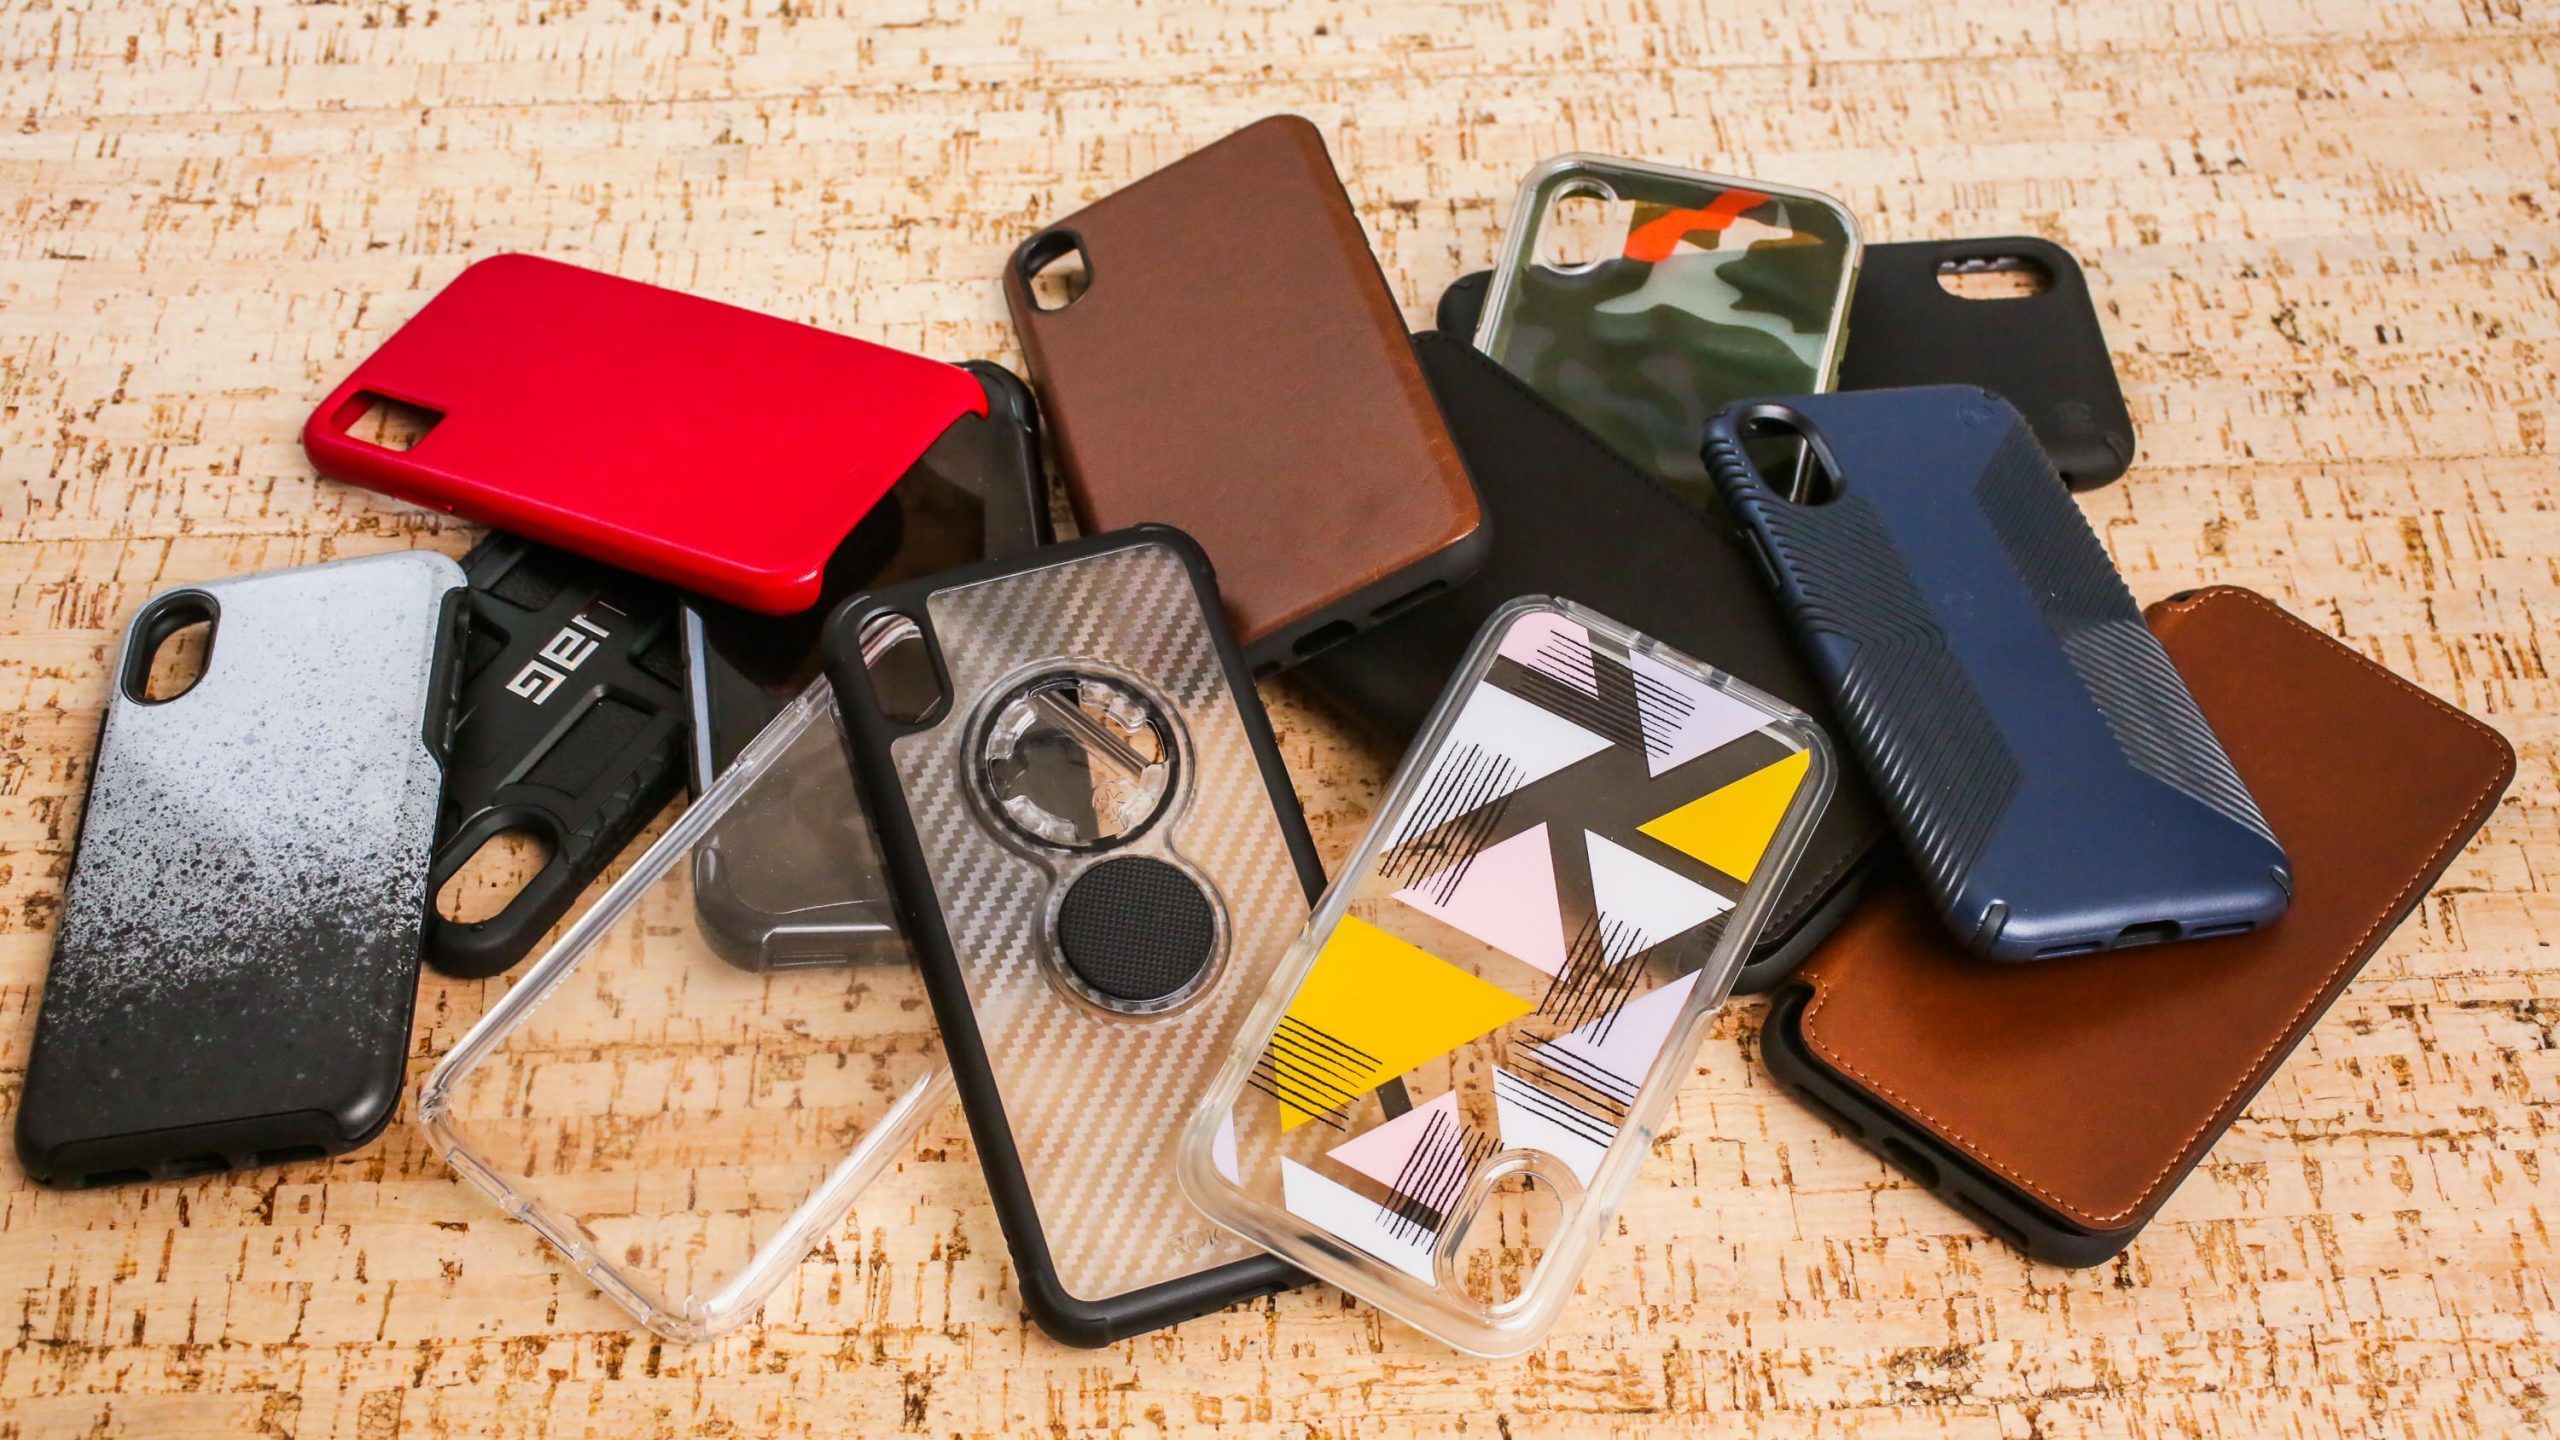 Чехол, защитная плёнка, накладка для смартфона / Phone Cases Protectors Skins Covers